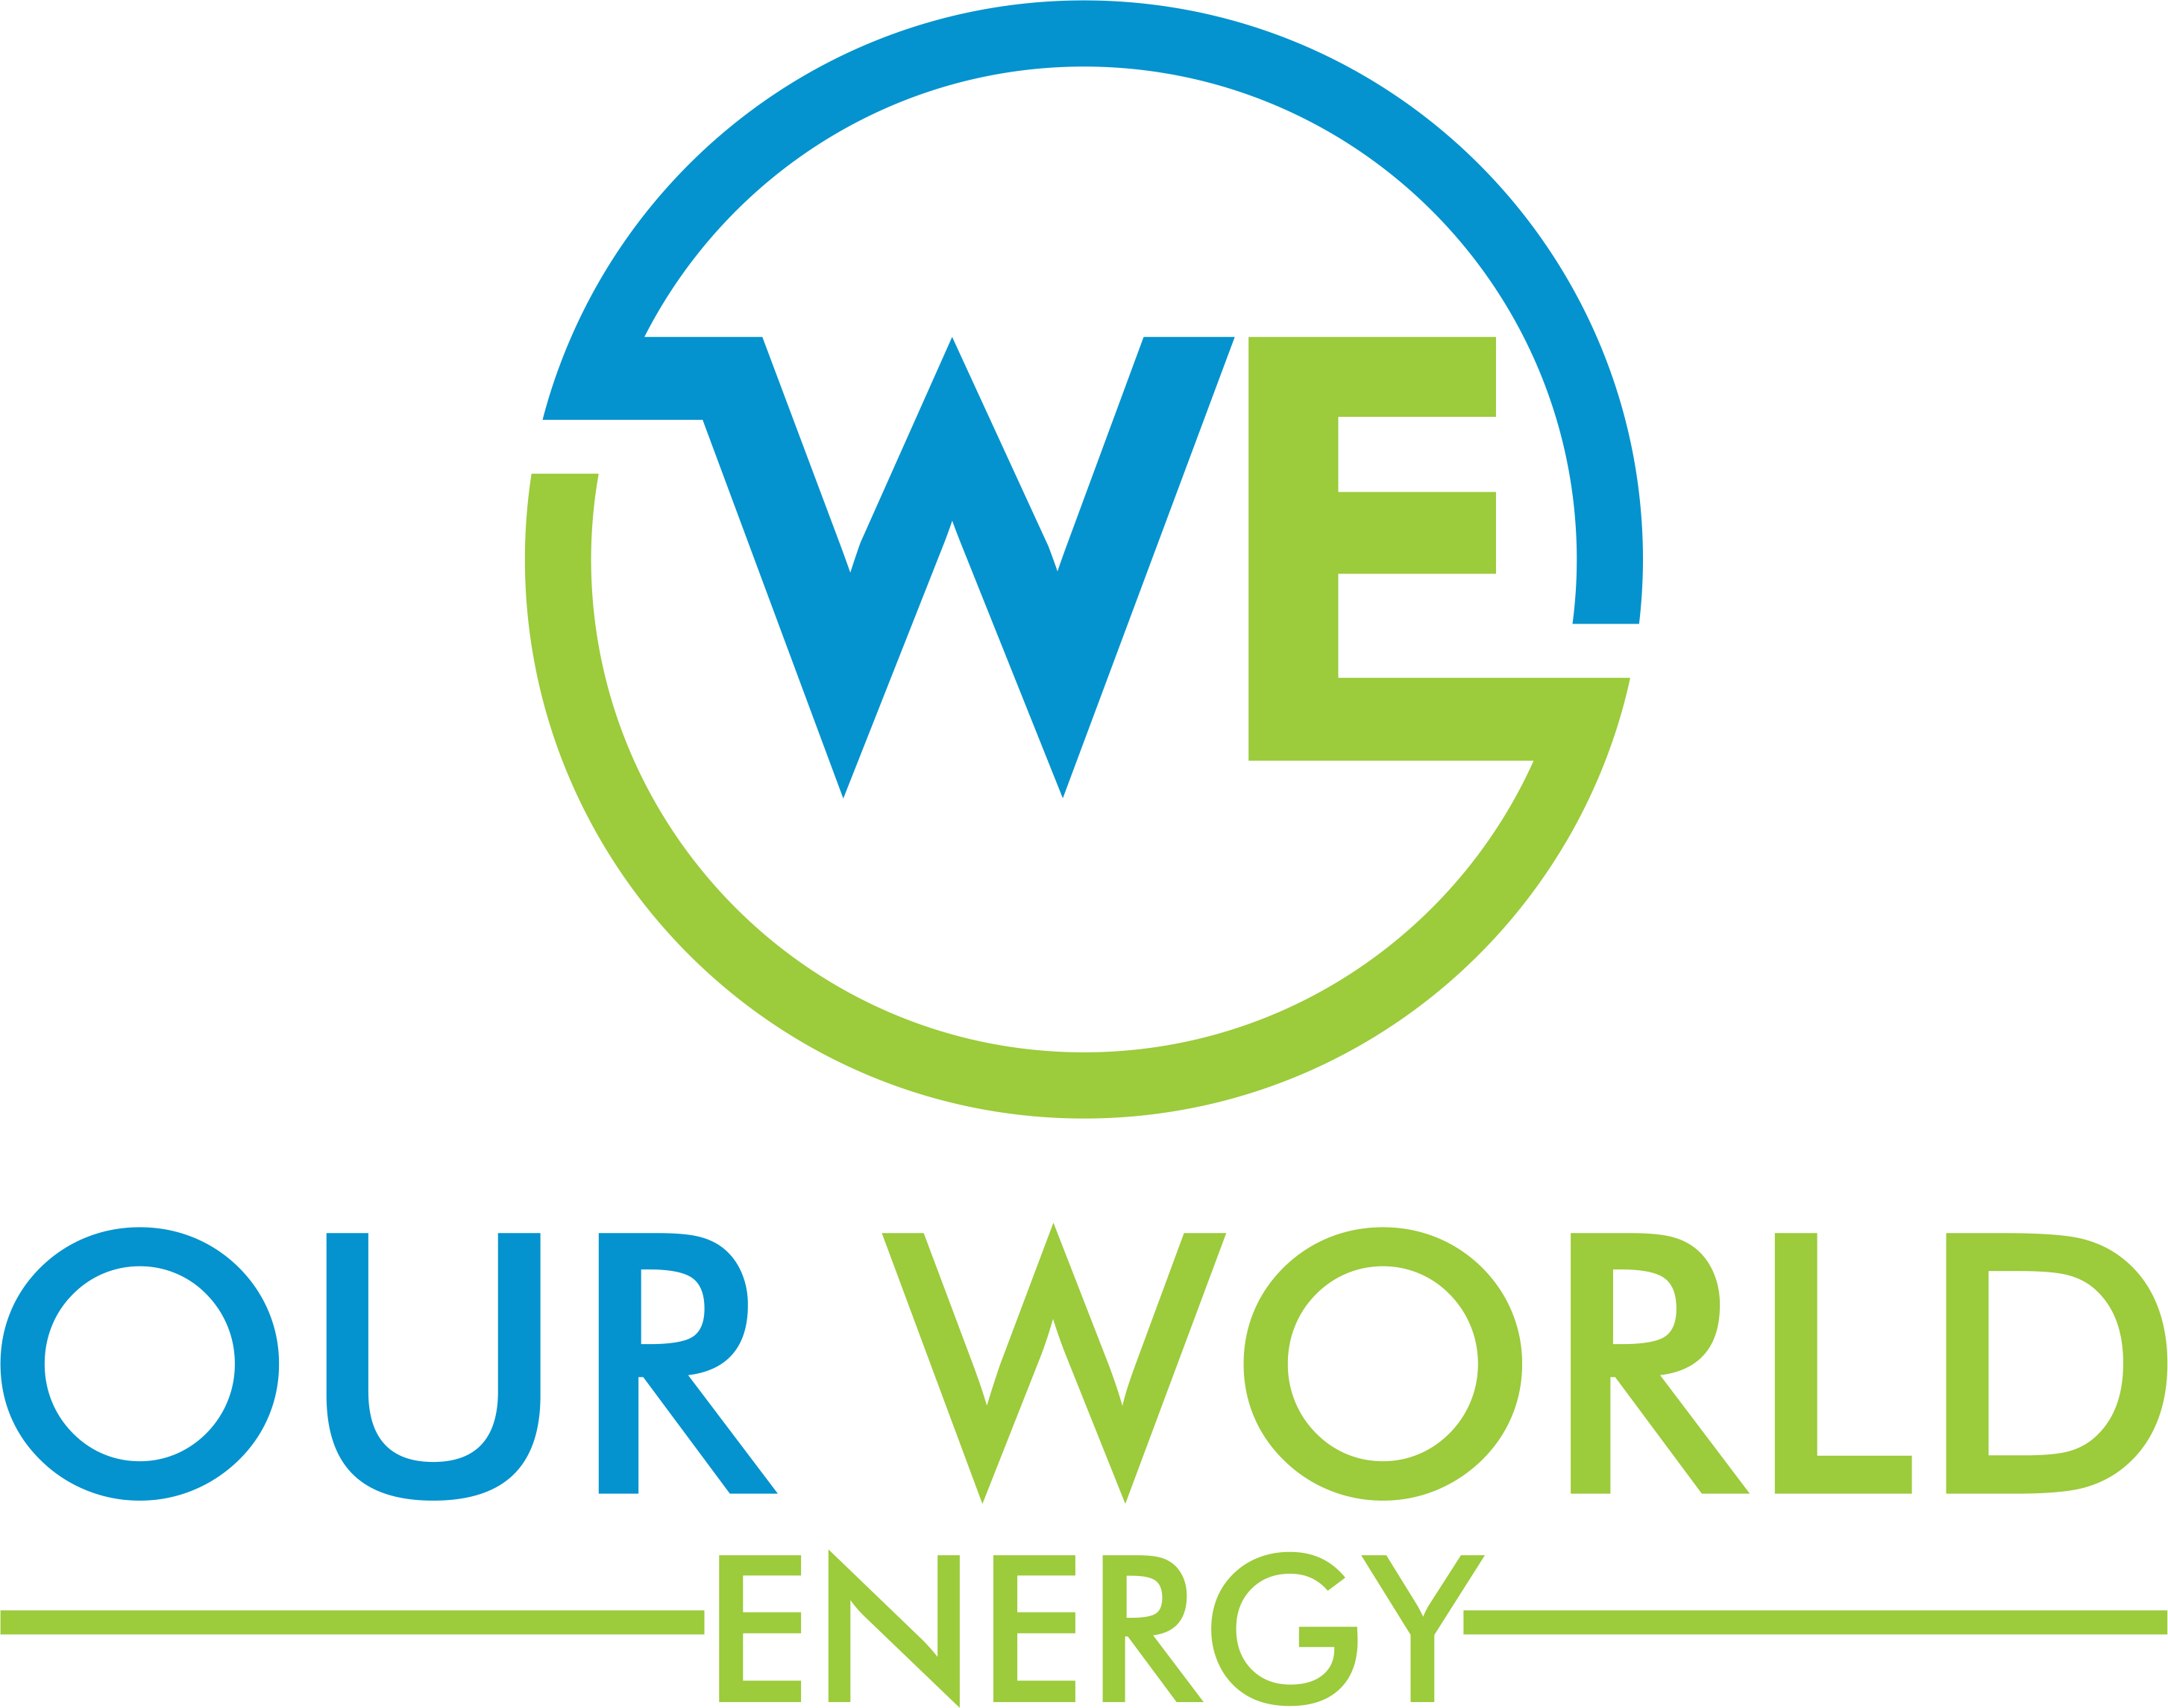 Our World Energy logo